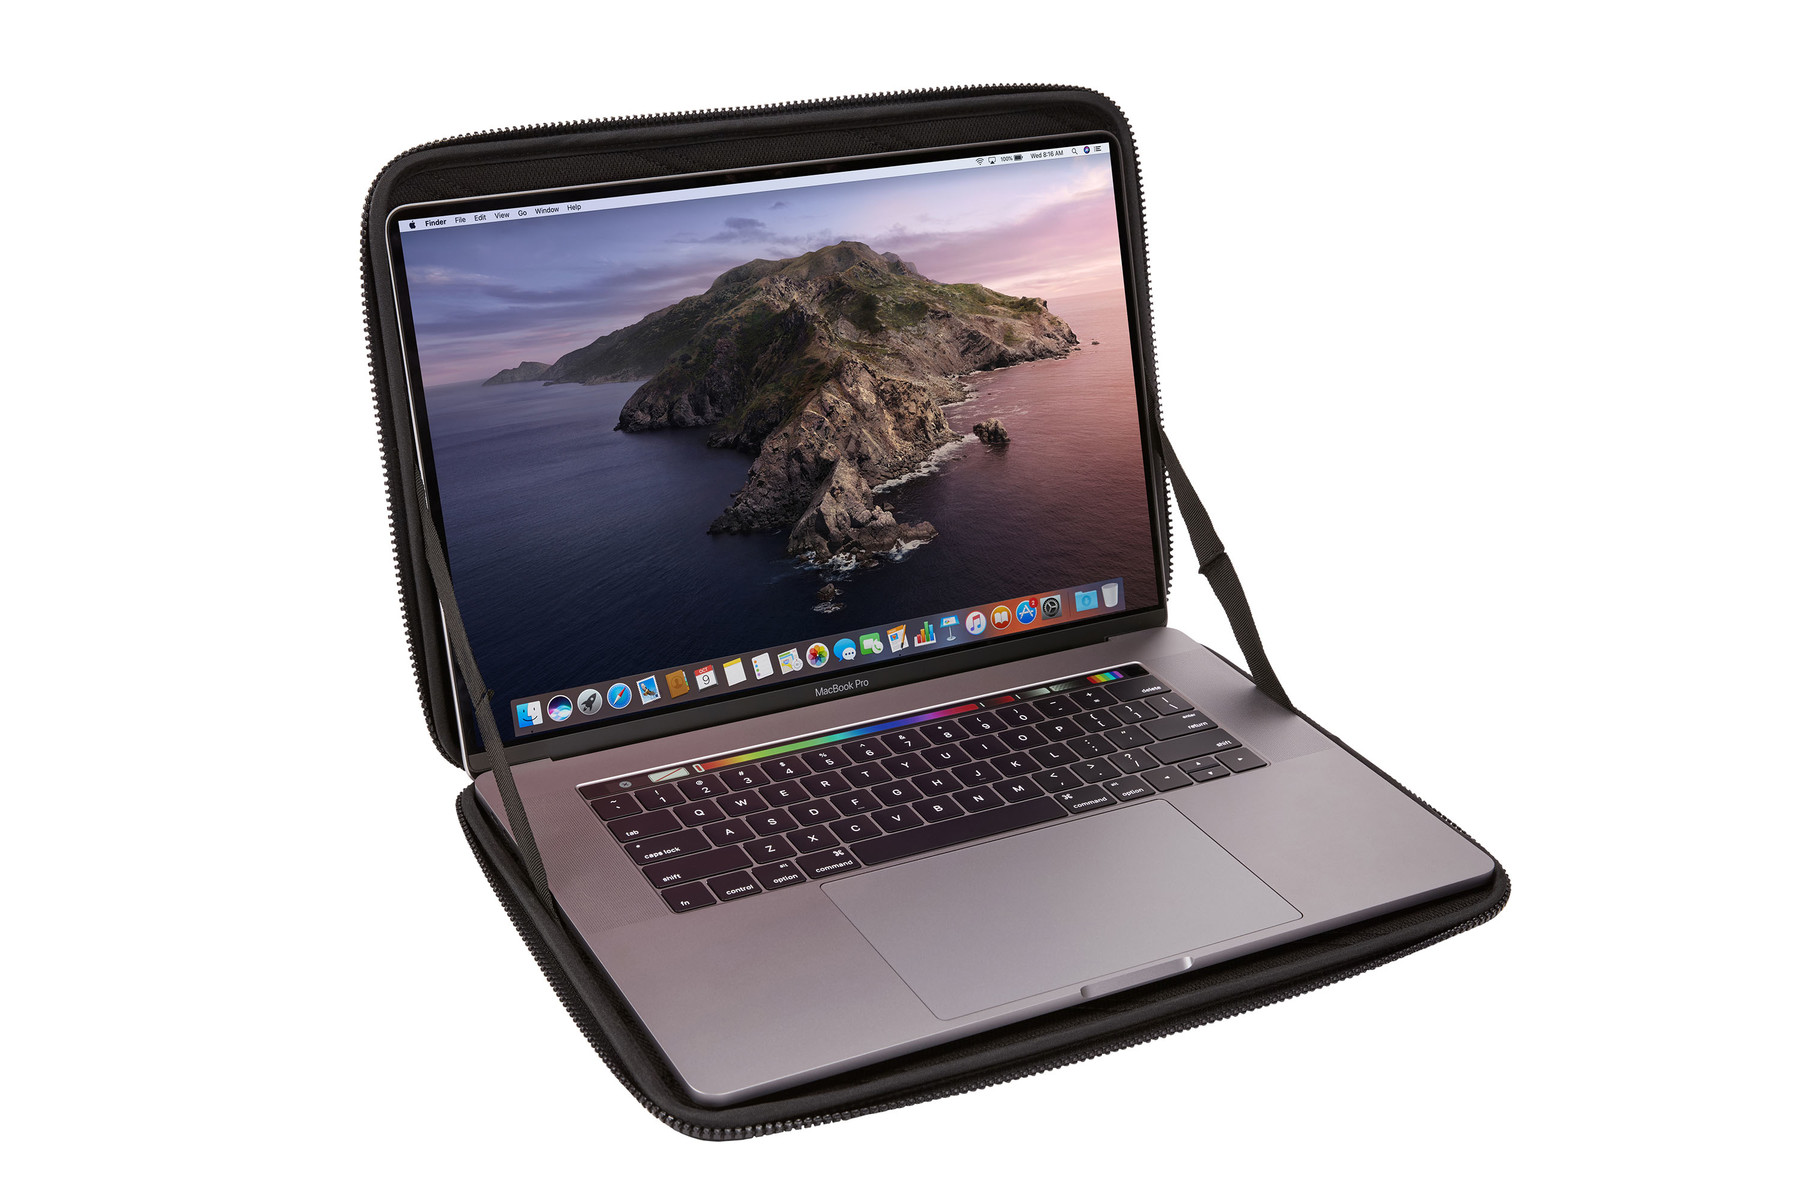 Чехол Thule 16-inch для MacBook Pro Gauntlet Sleeve Black TGSE2357BLK / 3204523 аксессуар чехол 16 inch thule для apple macbook pro gauntlet sleeve black tgse2357blk 3204523